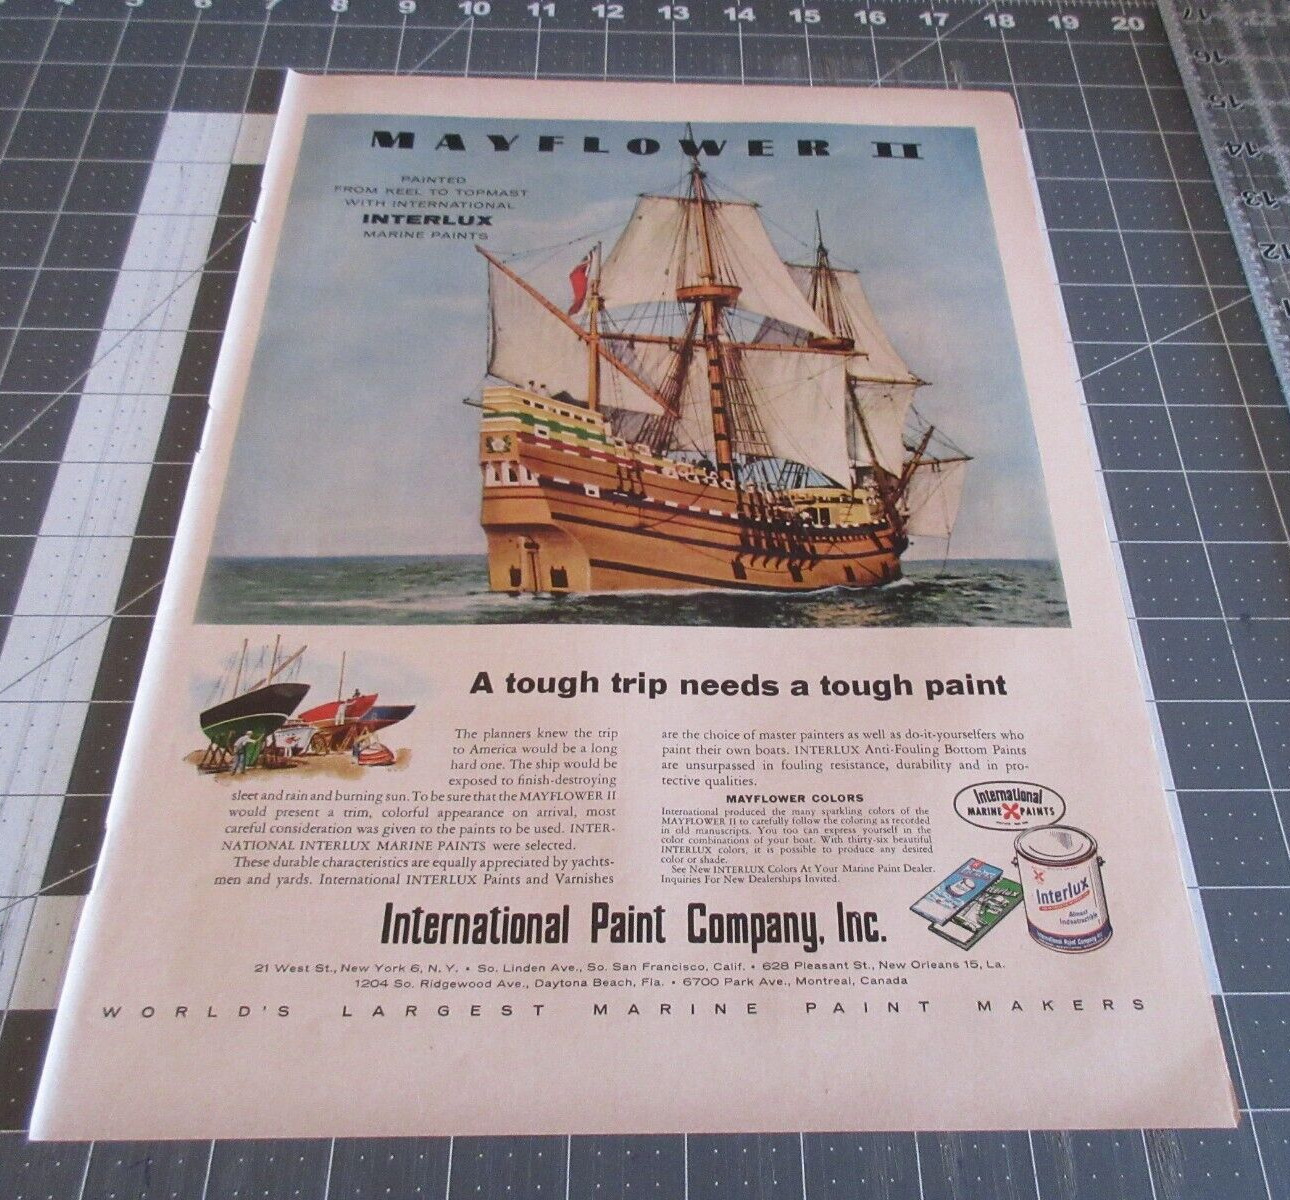 1957 International Paint Company, Mayflower II Vintage Print Ad